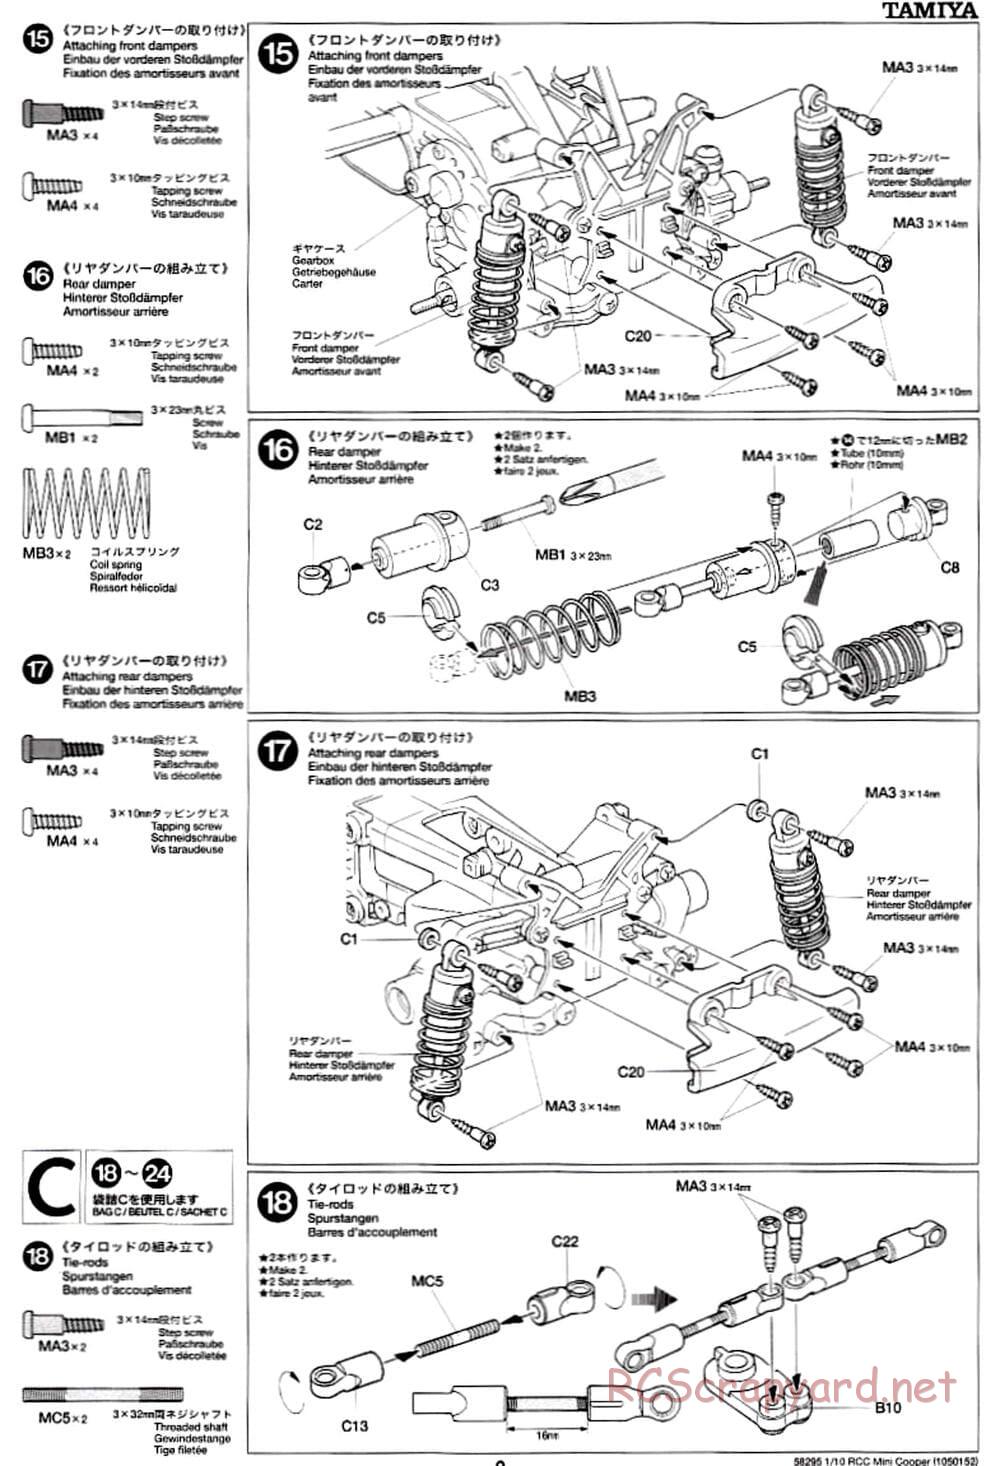 Tamiya - Mini Cooper - M03L Chassis - Manual - Page 8